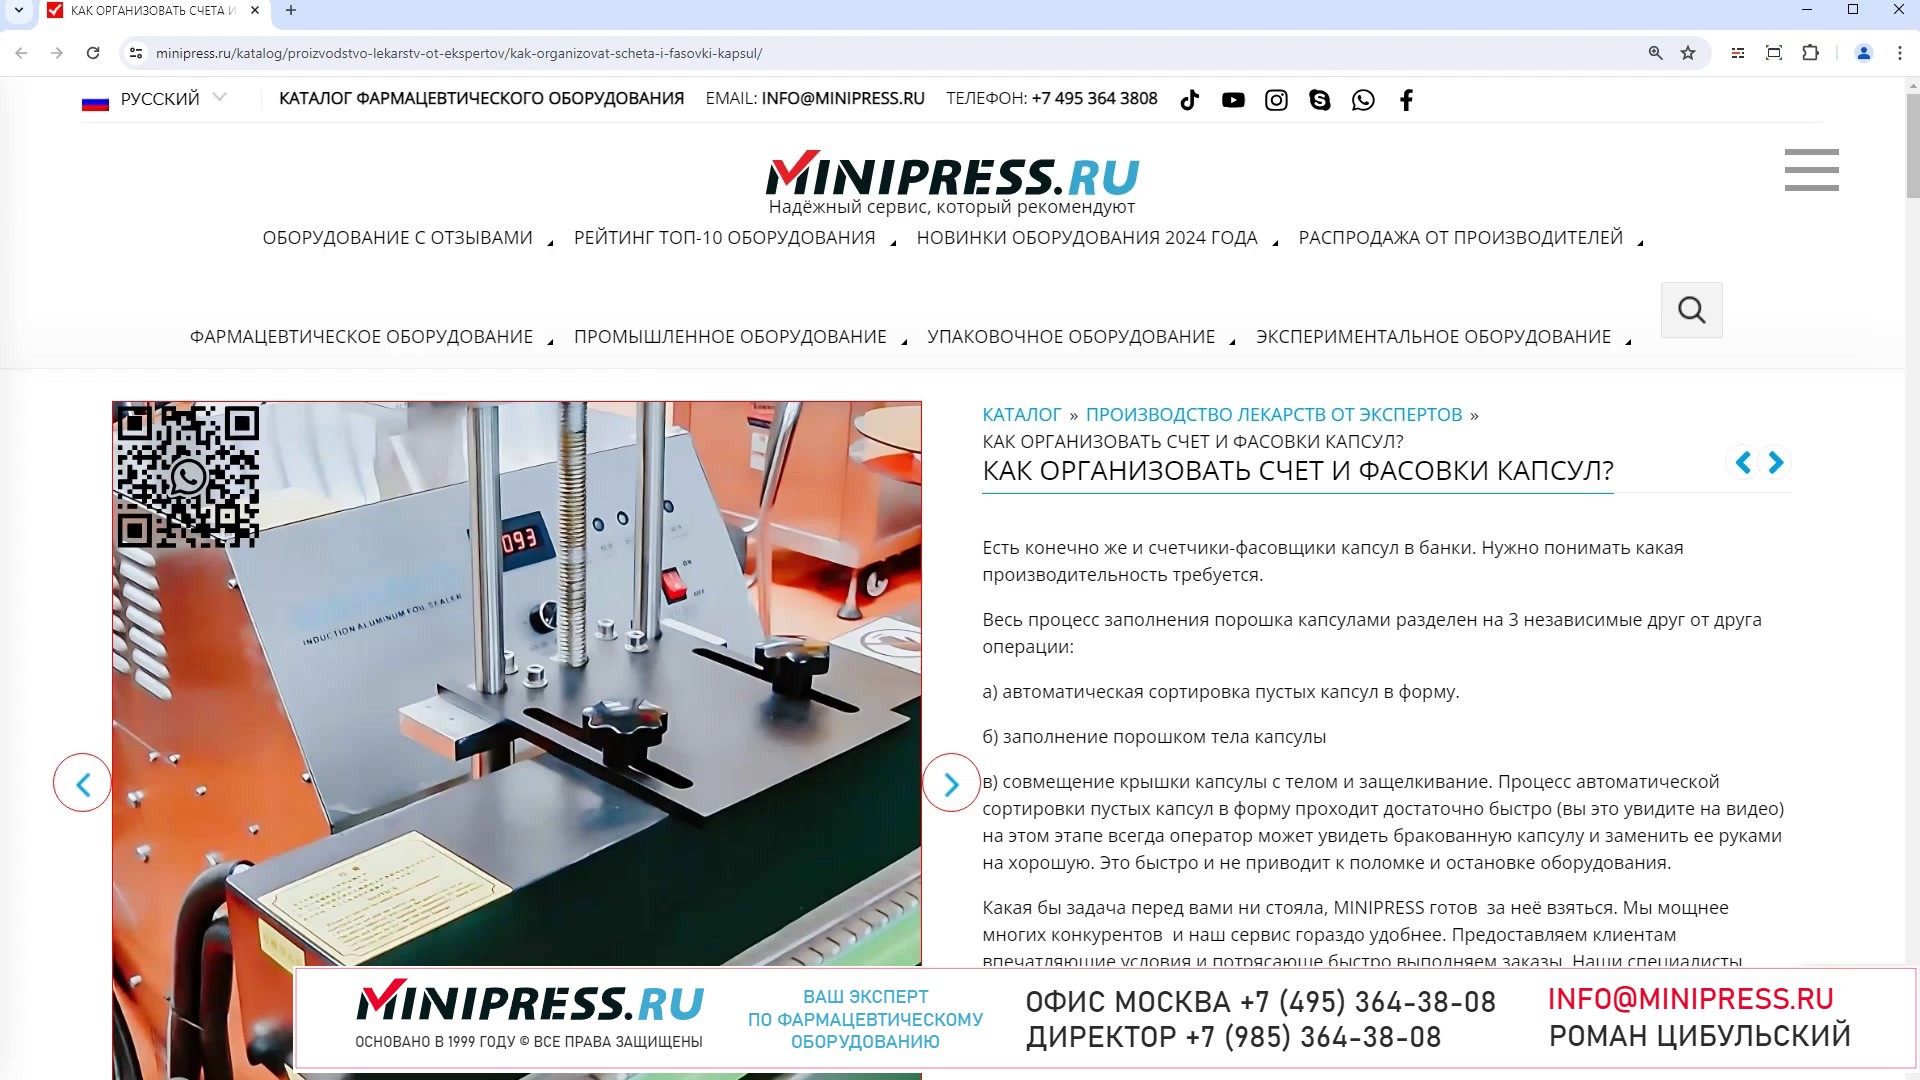 Minipress.ru Как организовать счет и фасовки капсул